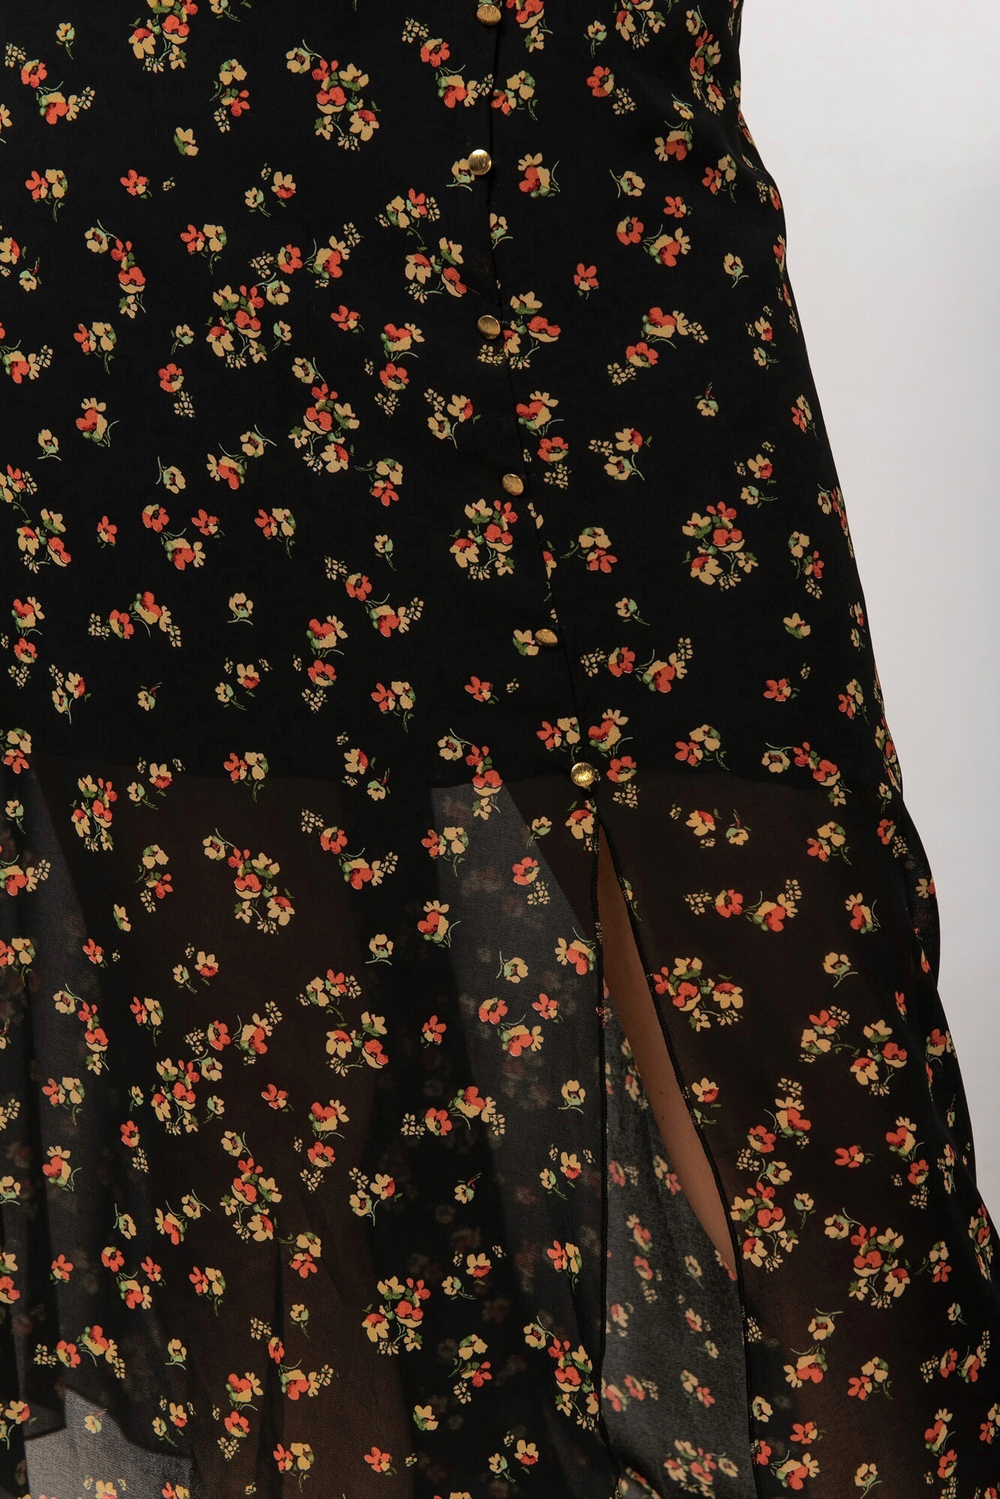 Шифоновая юбка с разрезом Тамбовчанка